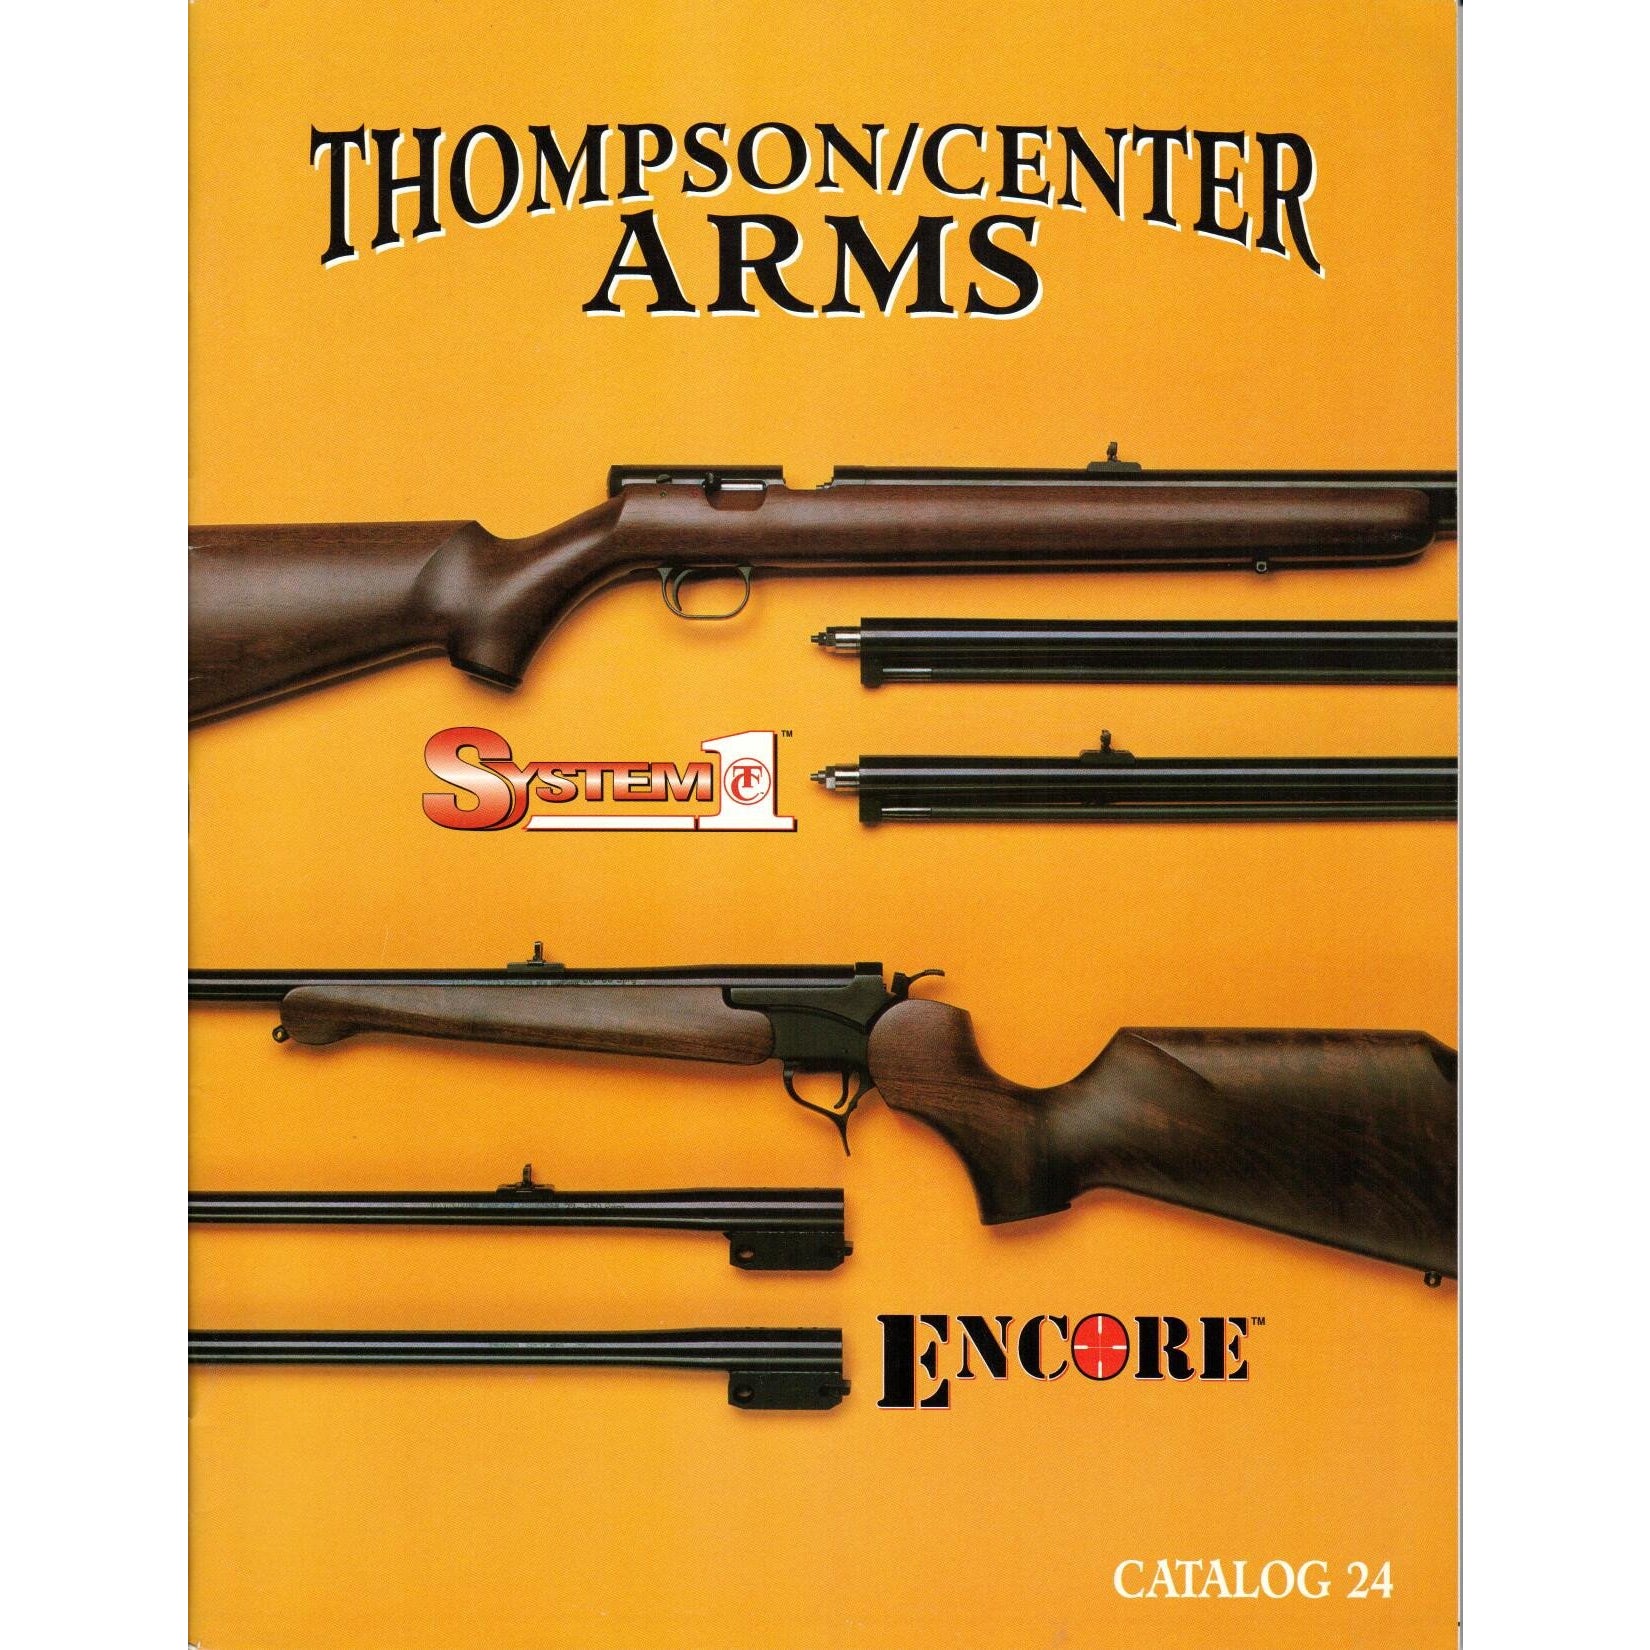 Thompson/Center Arms System 1/Encore Catalog 24